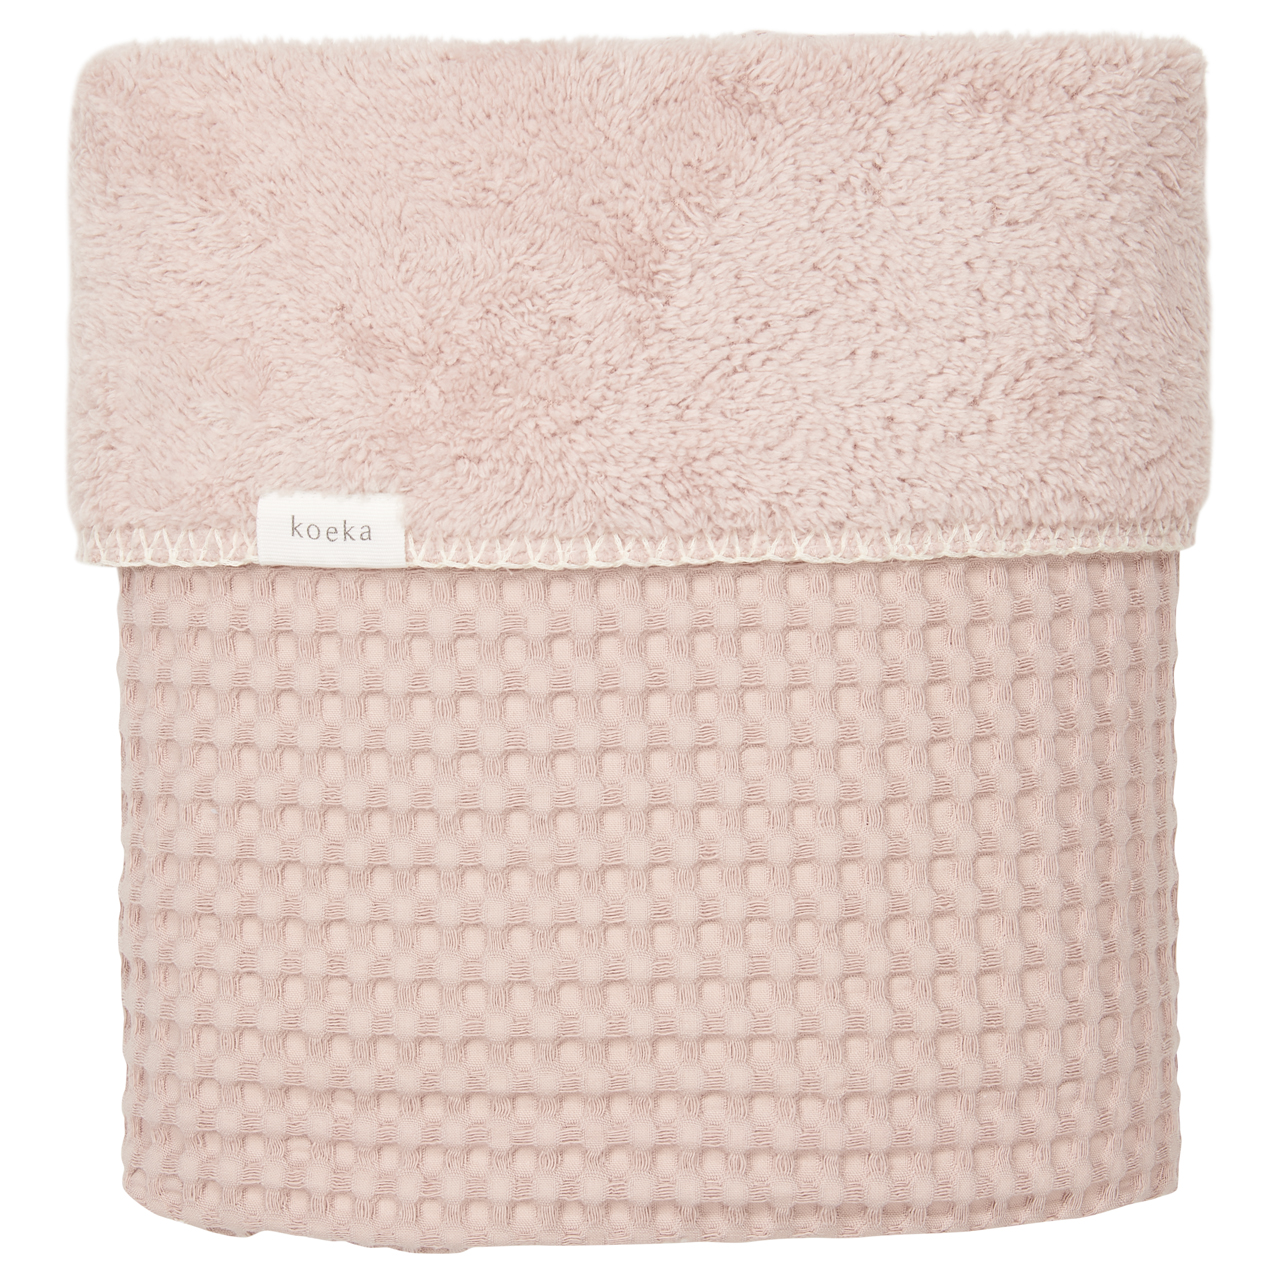 Single bed blanket teddy Oslo grey pink/grey pink